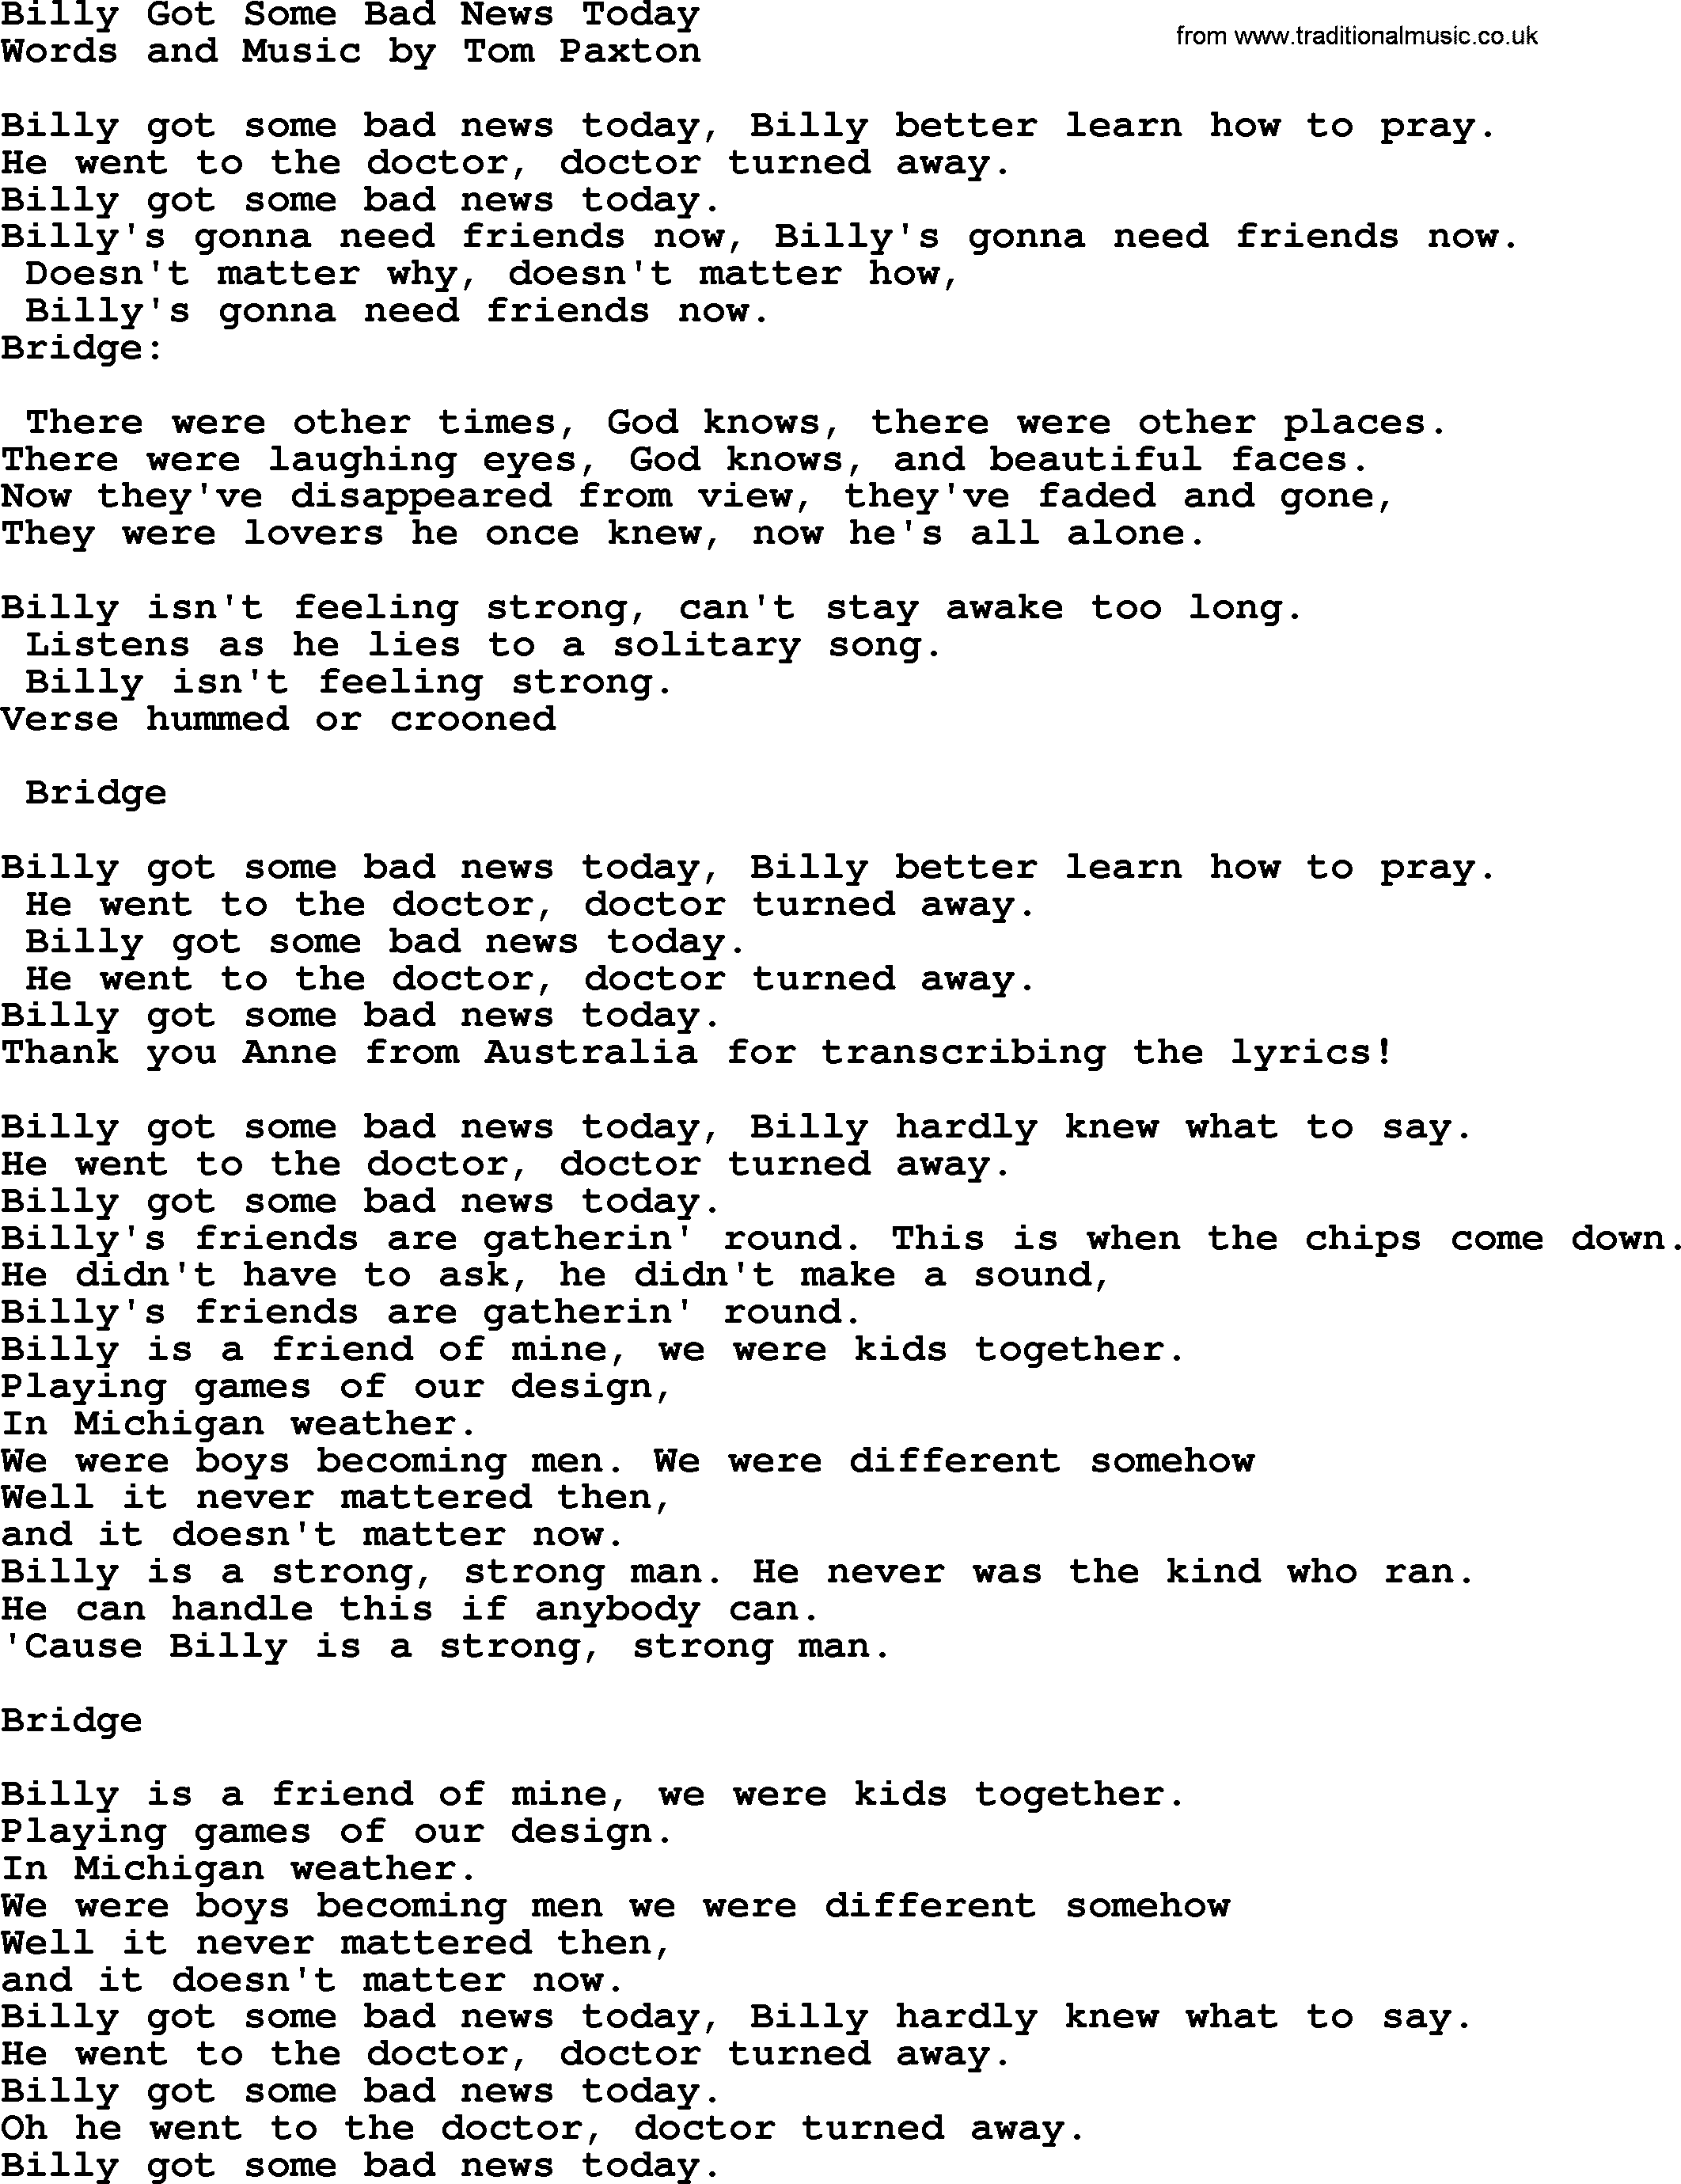 Tom Paxton song: Billy Got Some Bad News Today, lyrics